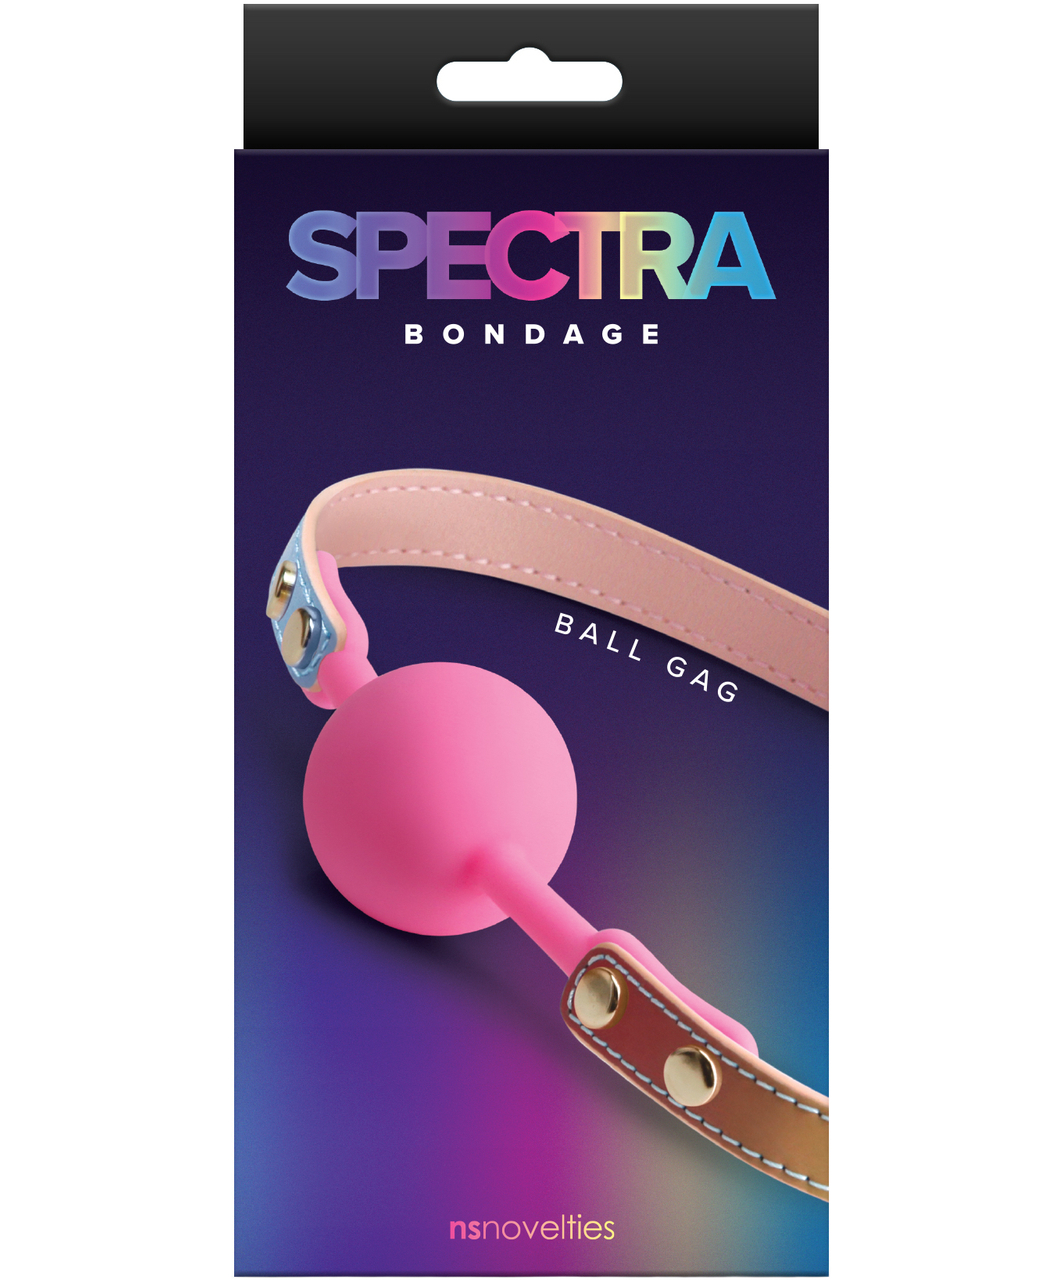 NS Novelties Spectra Bondage ball gag